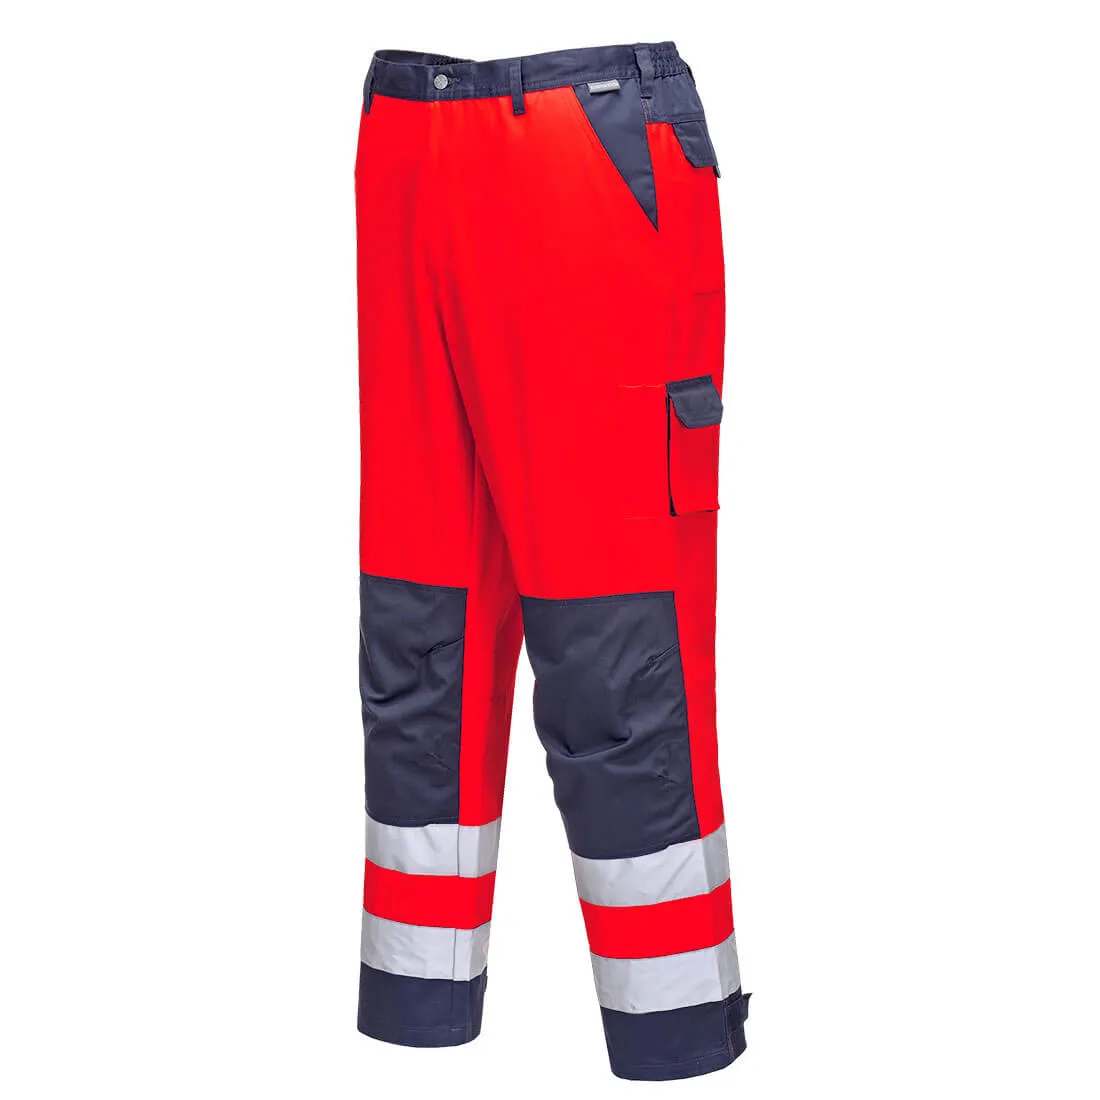 Portwest Lyon Hi Vis Work Trousers - Red / Navy, Medium, 32"